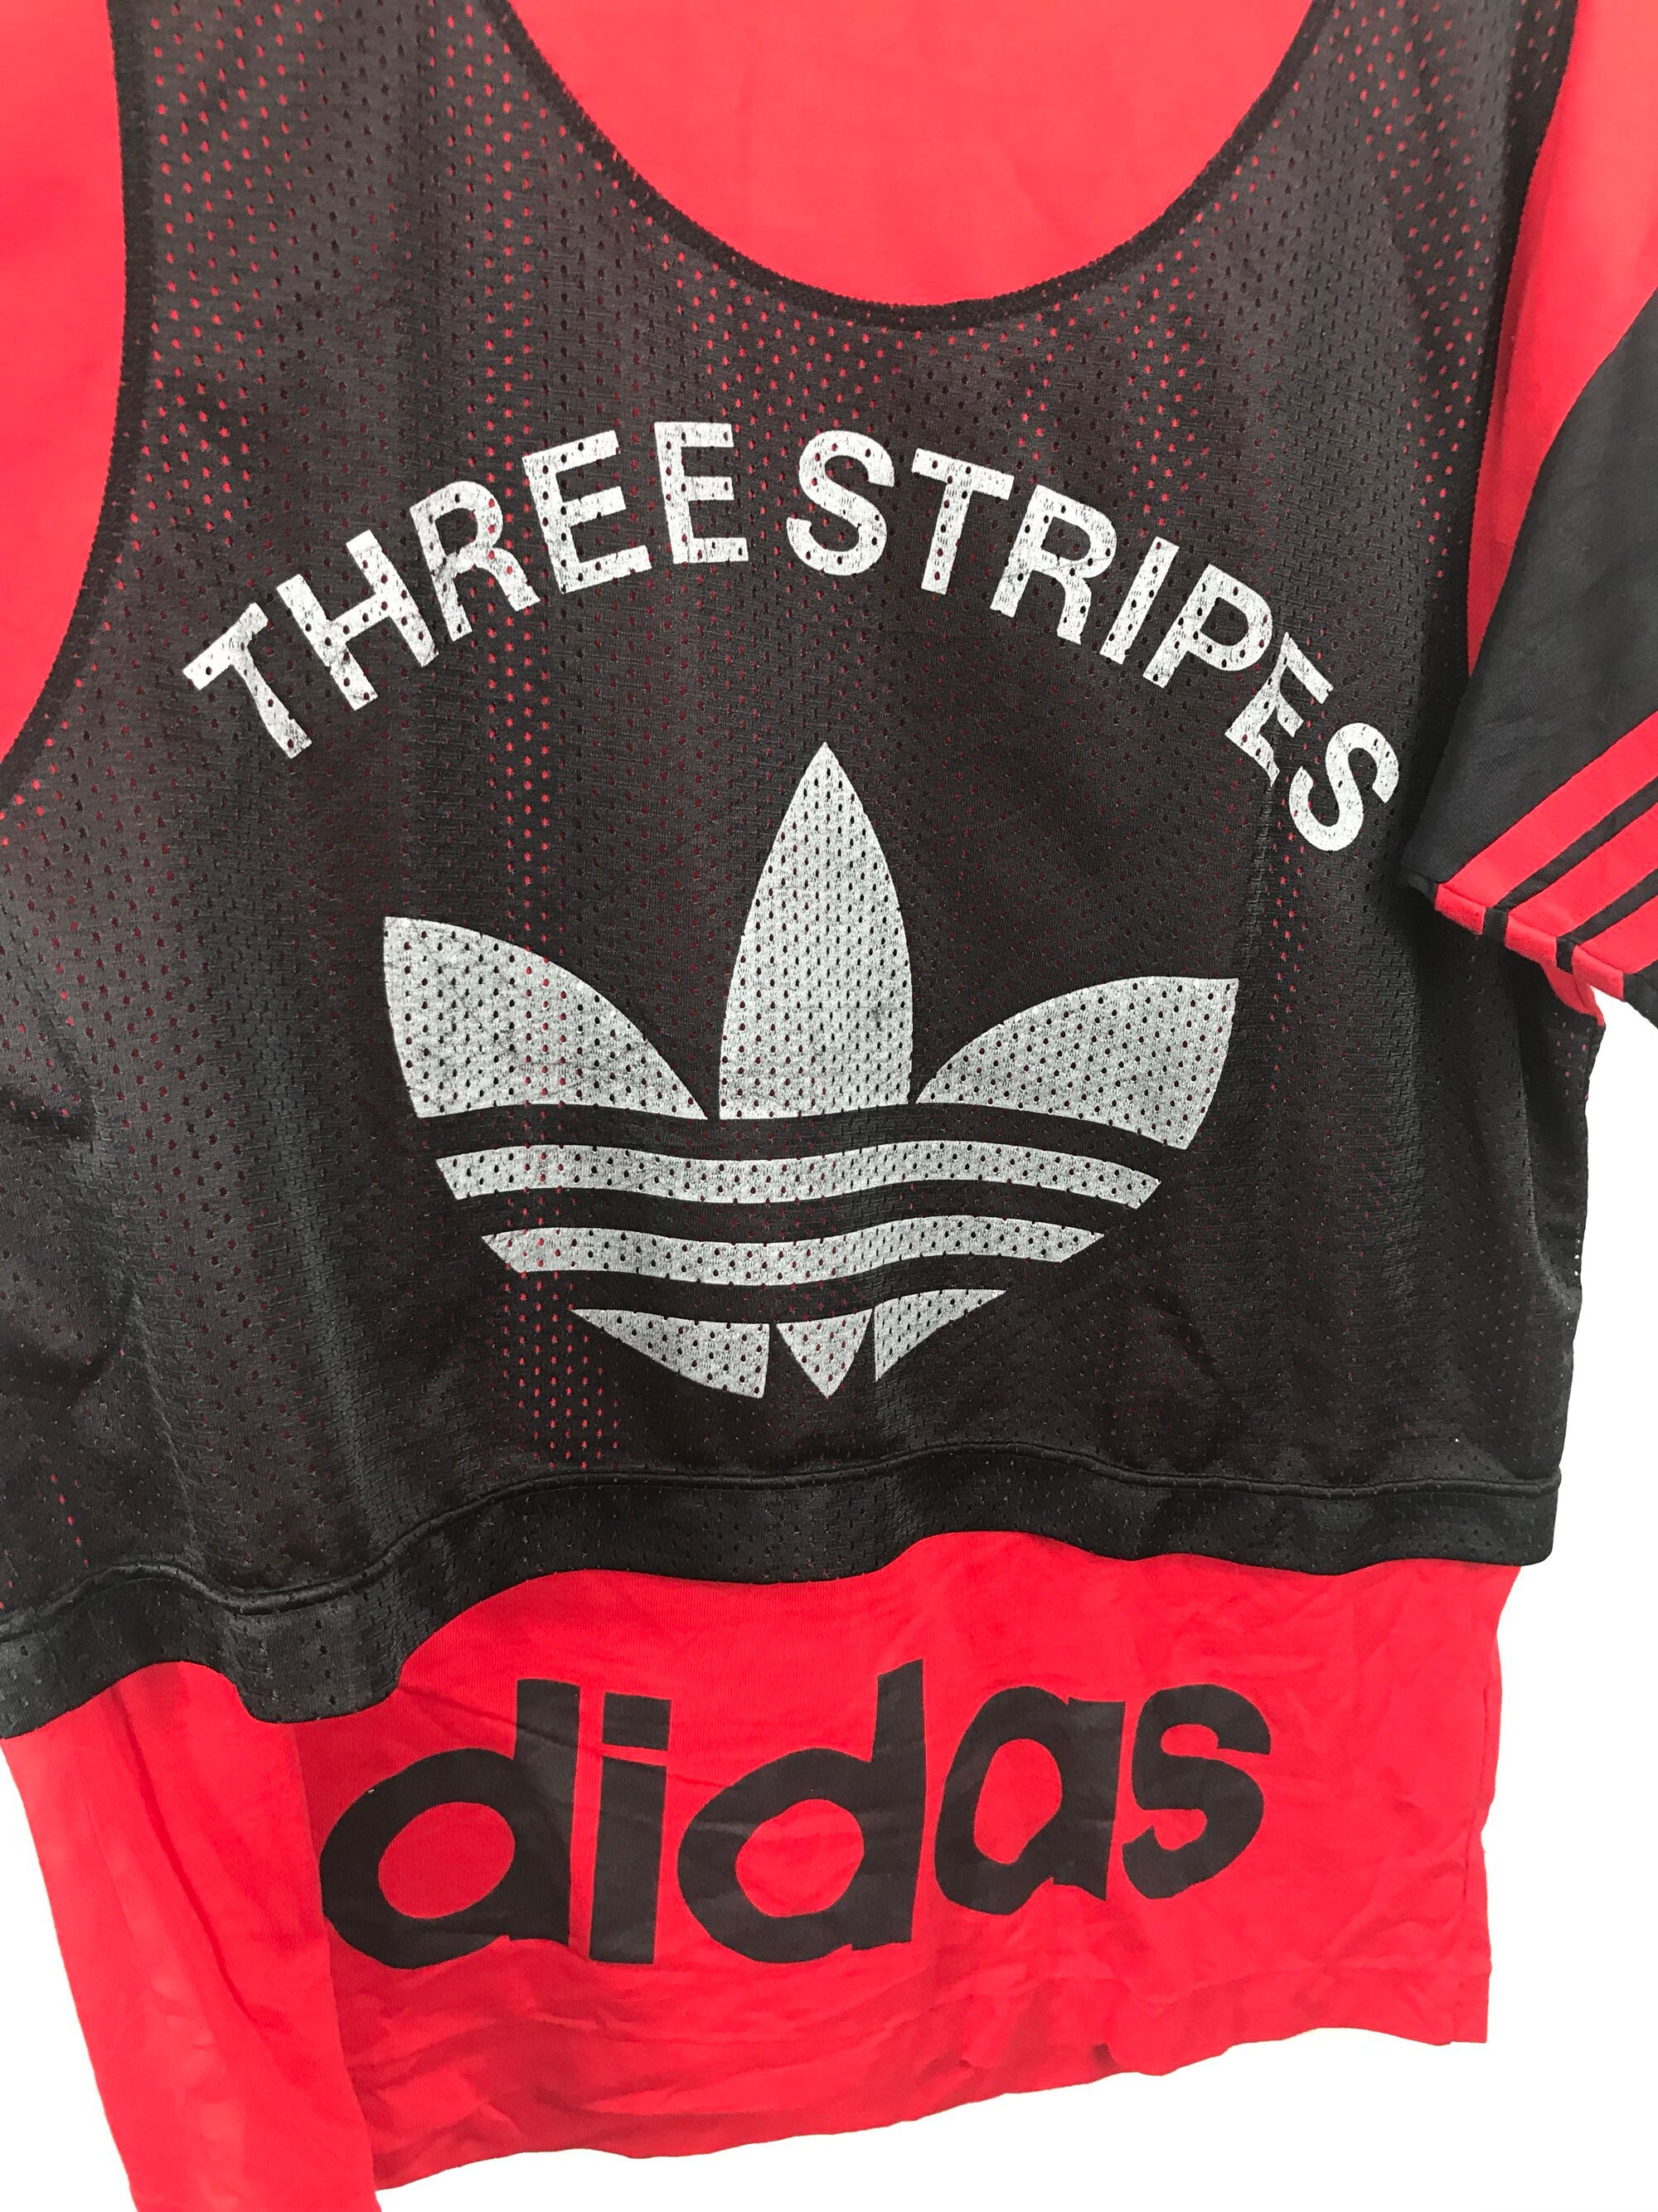 Rare Adidas Three Stripes Big Print Shirt Large Size Made in - Etsy